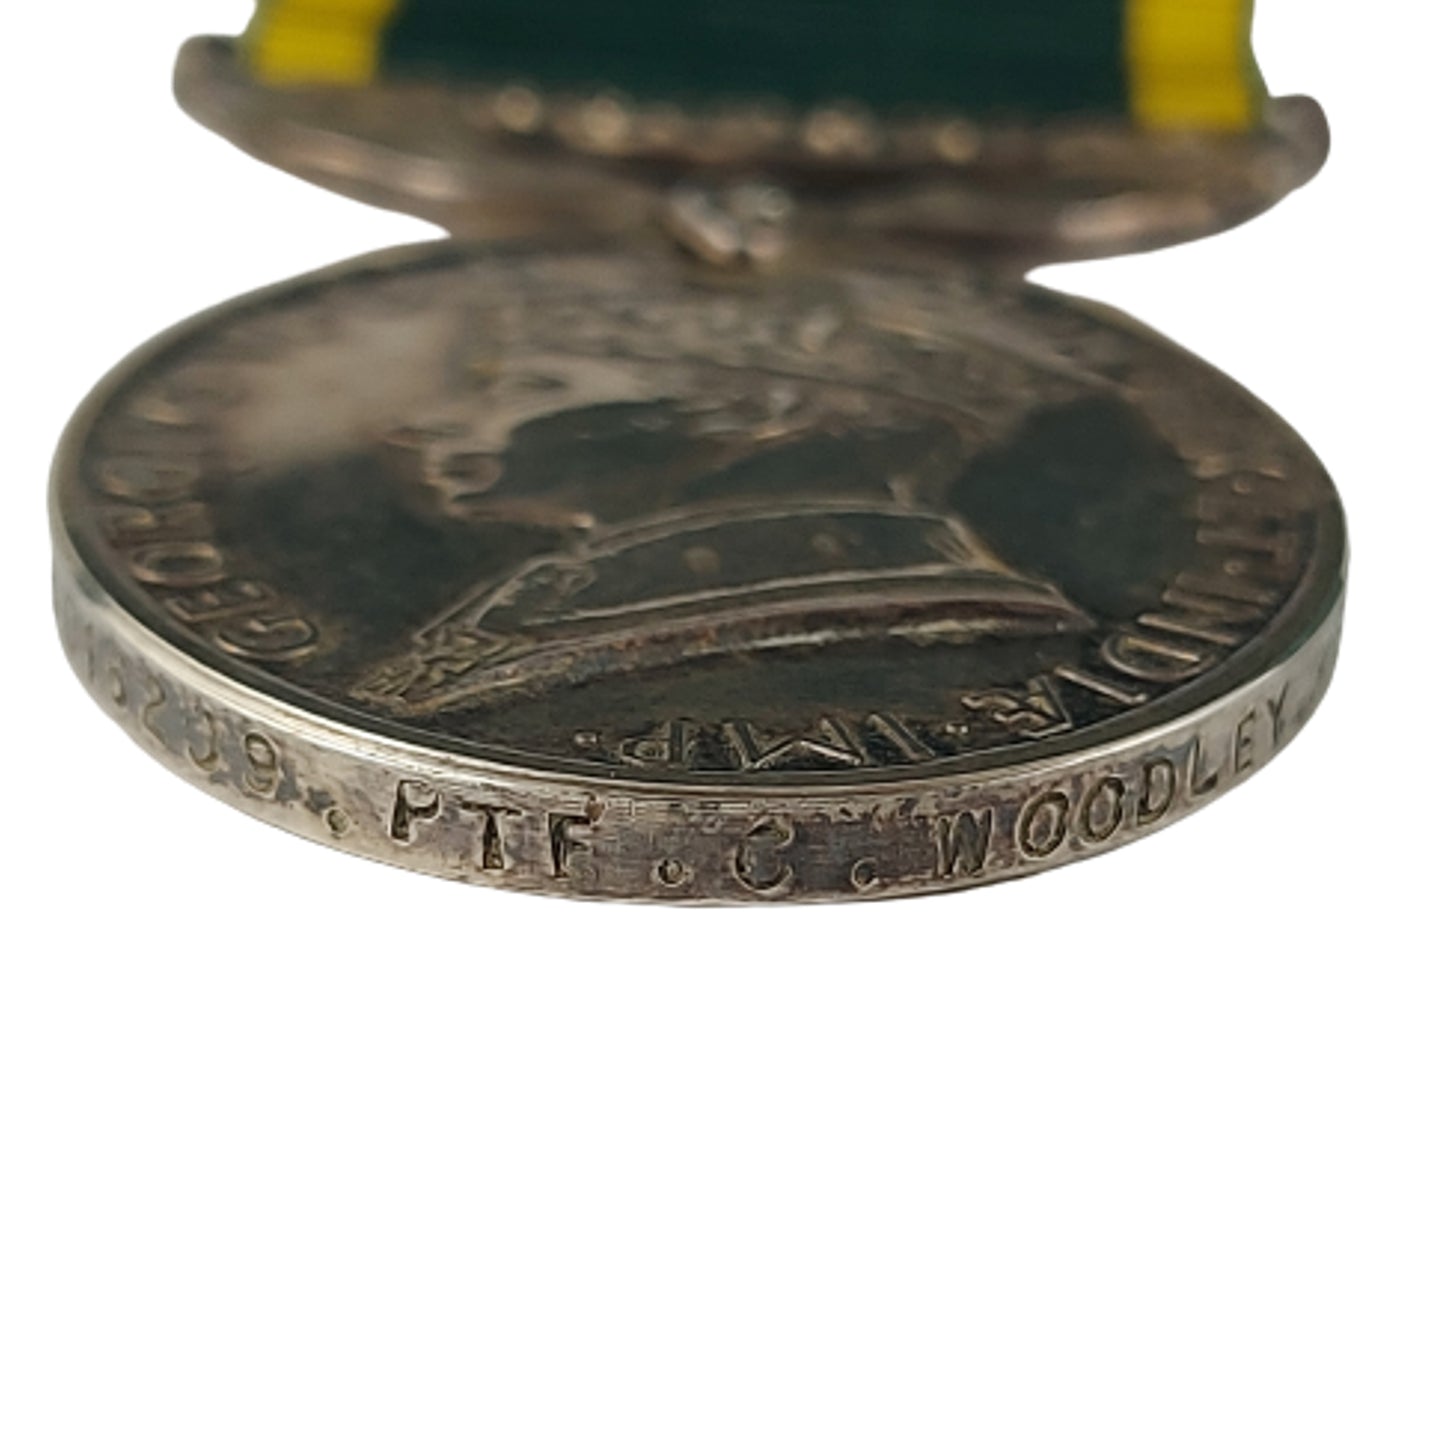 WW1 Territorial Efficiency Medal In Case Of Issue - Essex Regiment